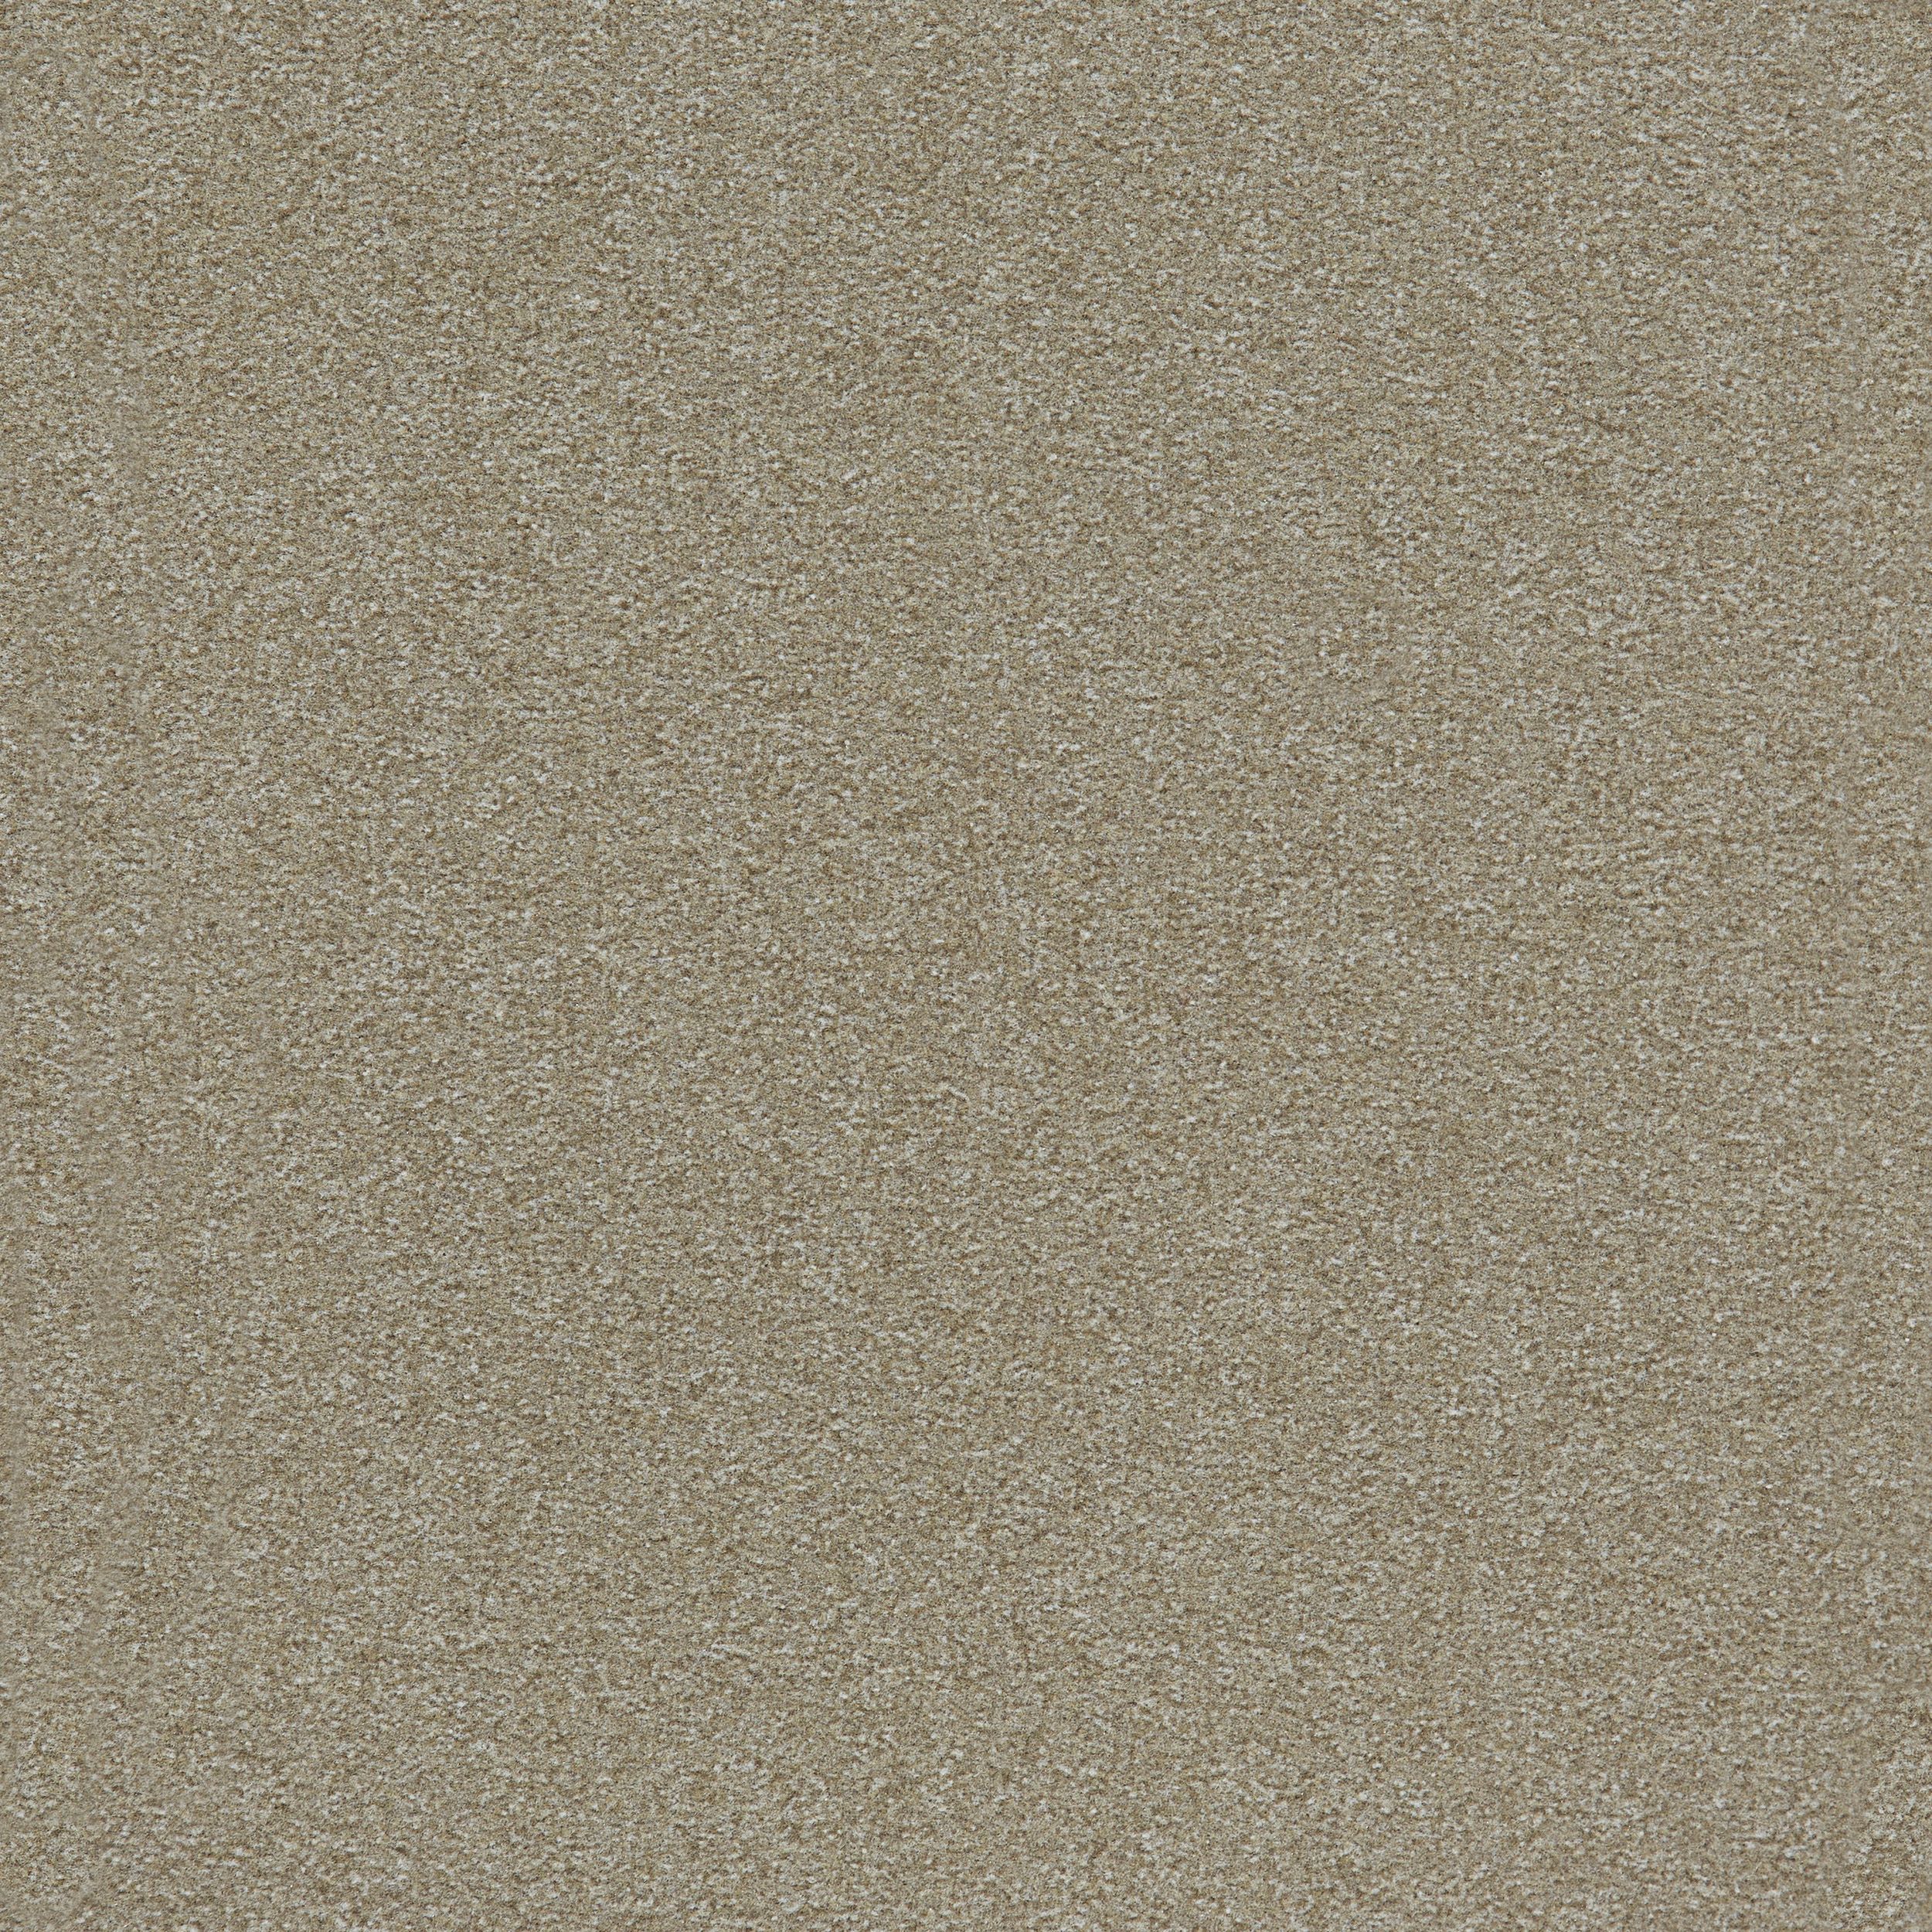 Heuga 725 Carpet Tile In Oyster afbeeldingnummer 3